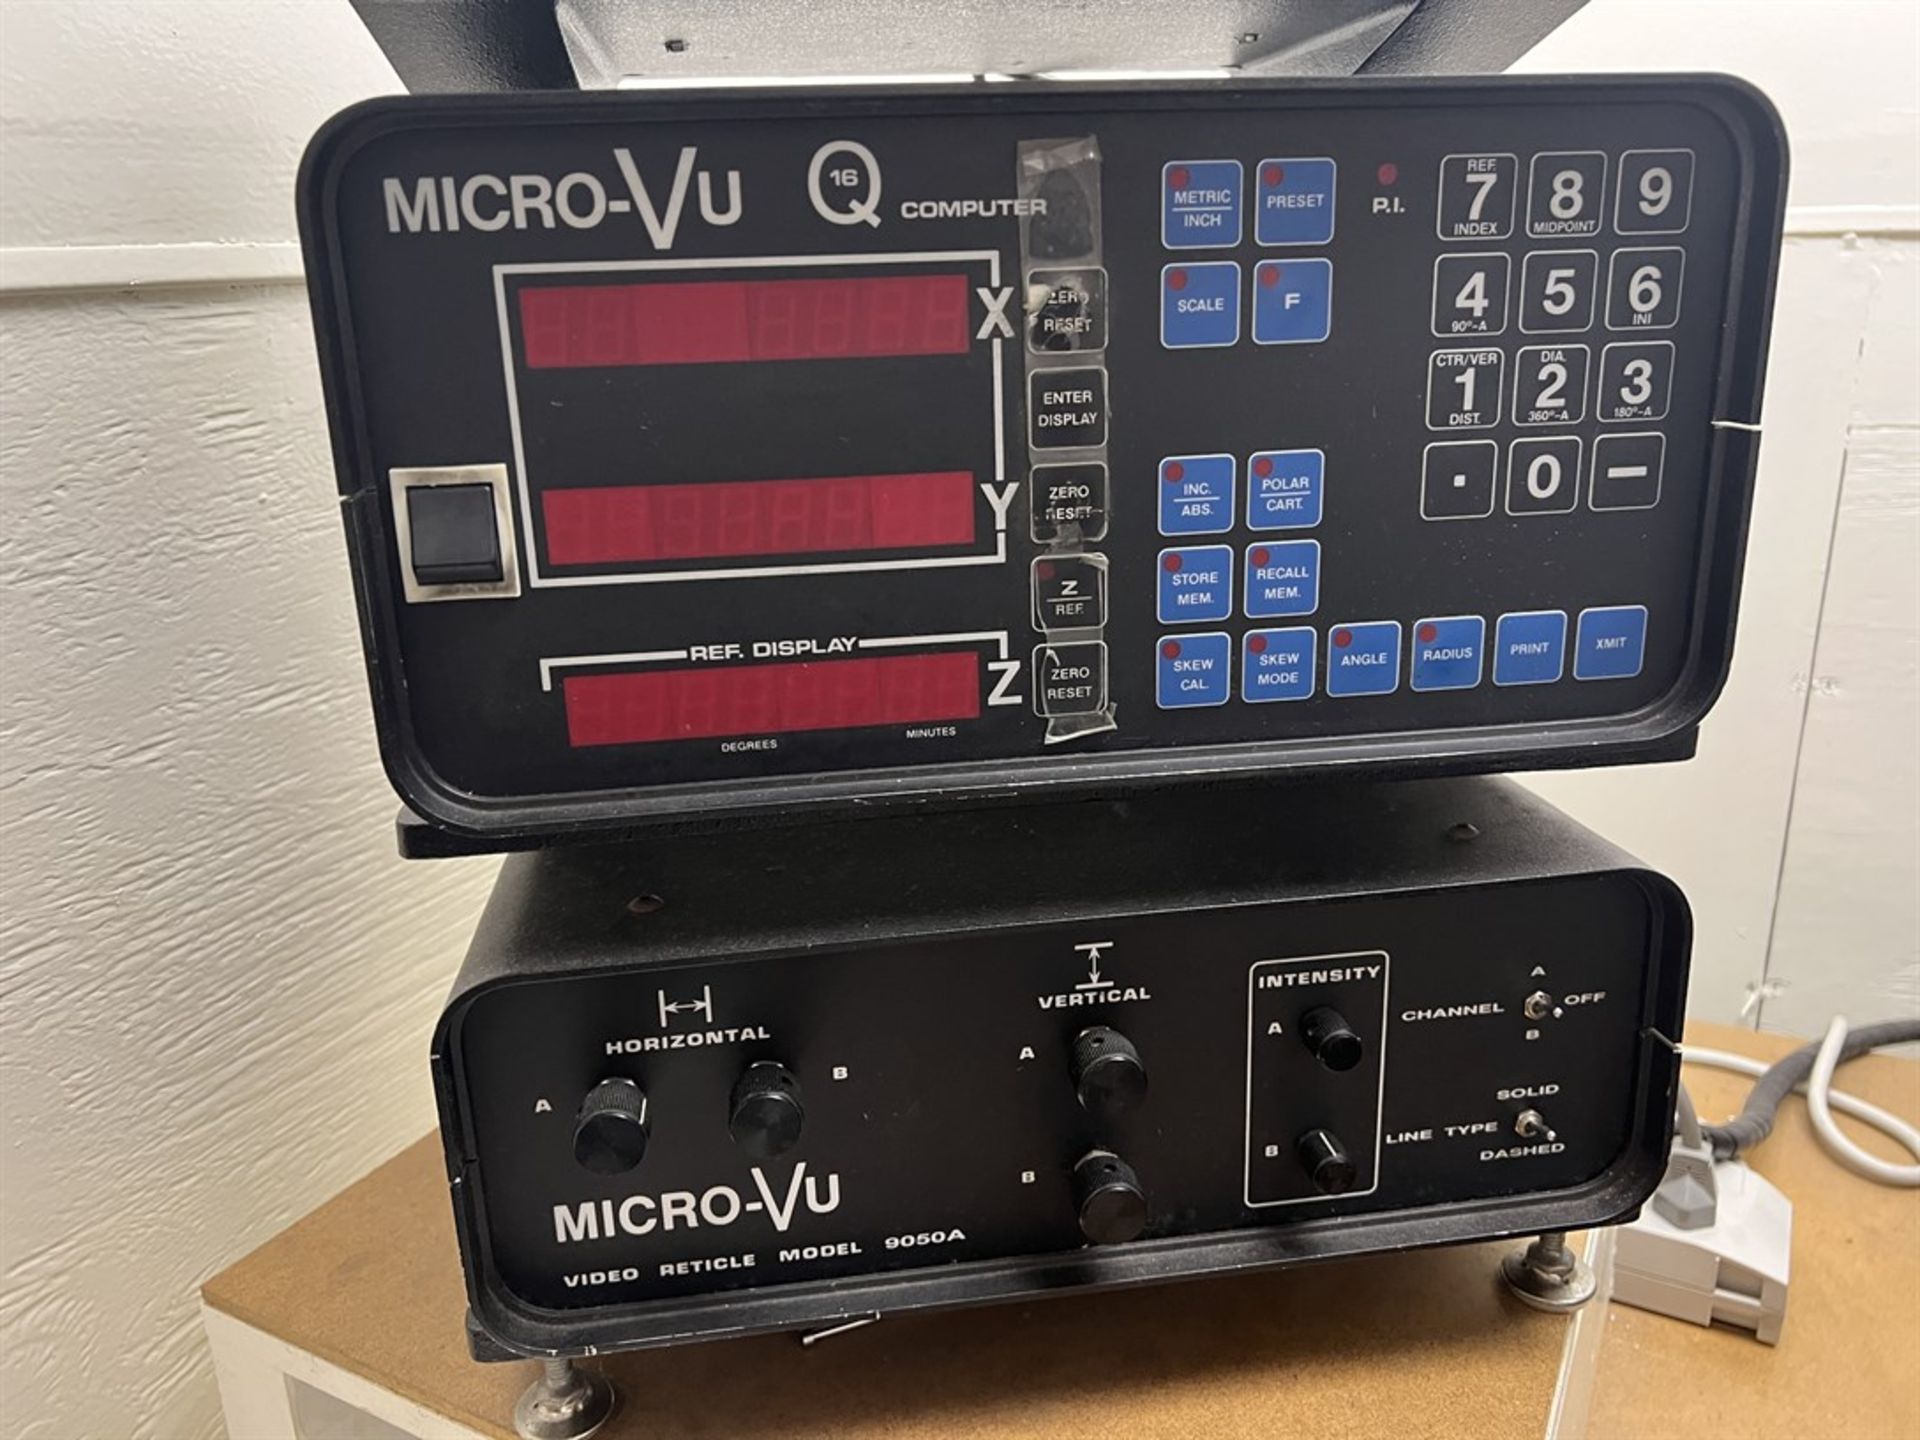 MICRO VU 14”x 14” Video Measuring Machine, s/n na, Mod 9050A Video Reticle, 3 Axis DRO - Image 8 of 9